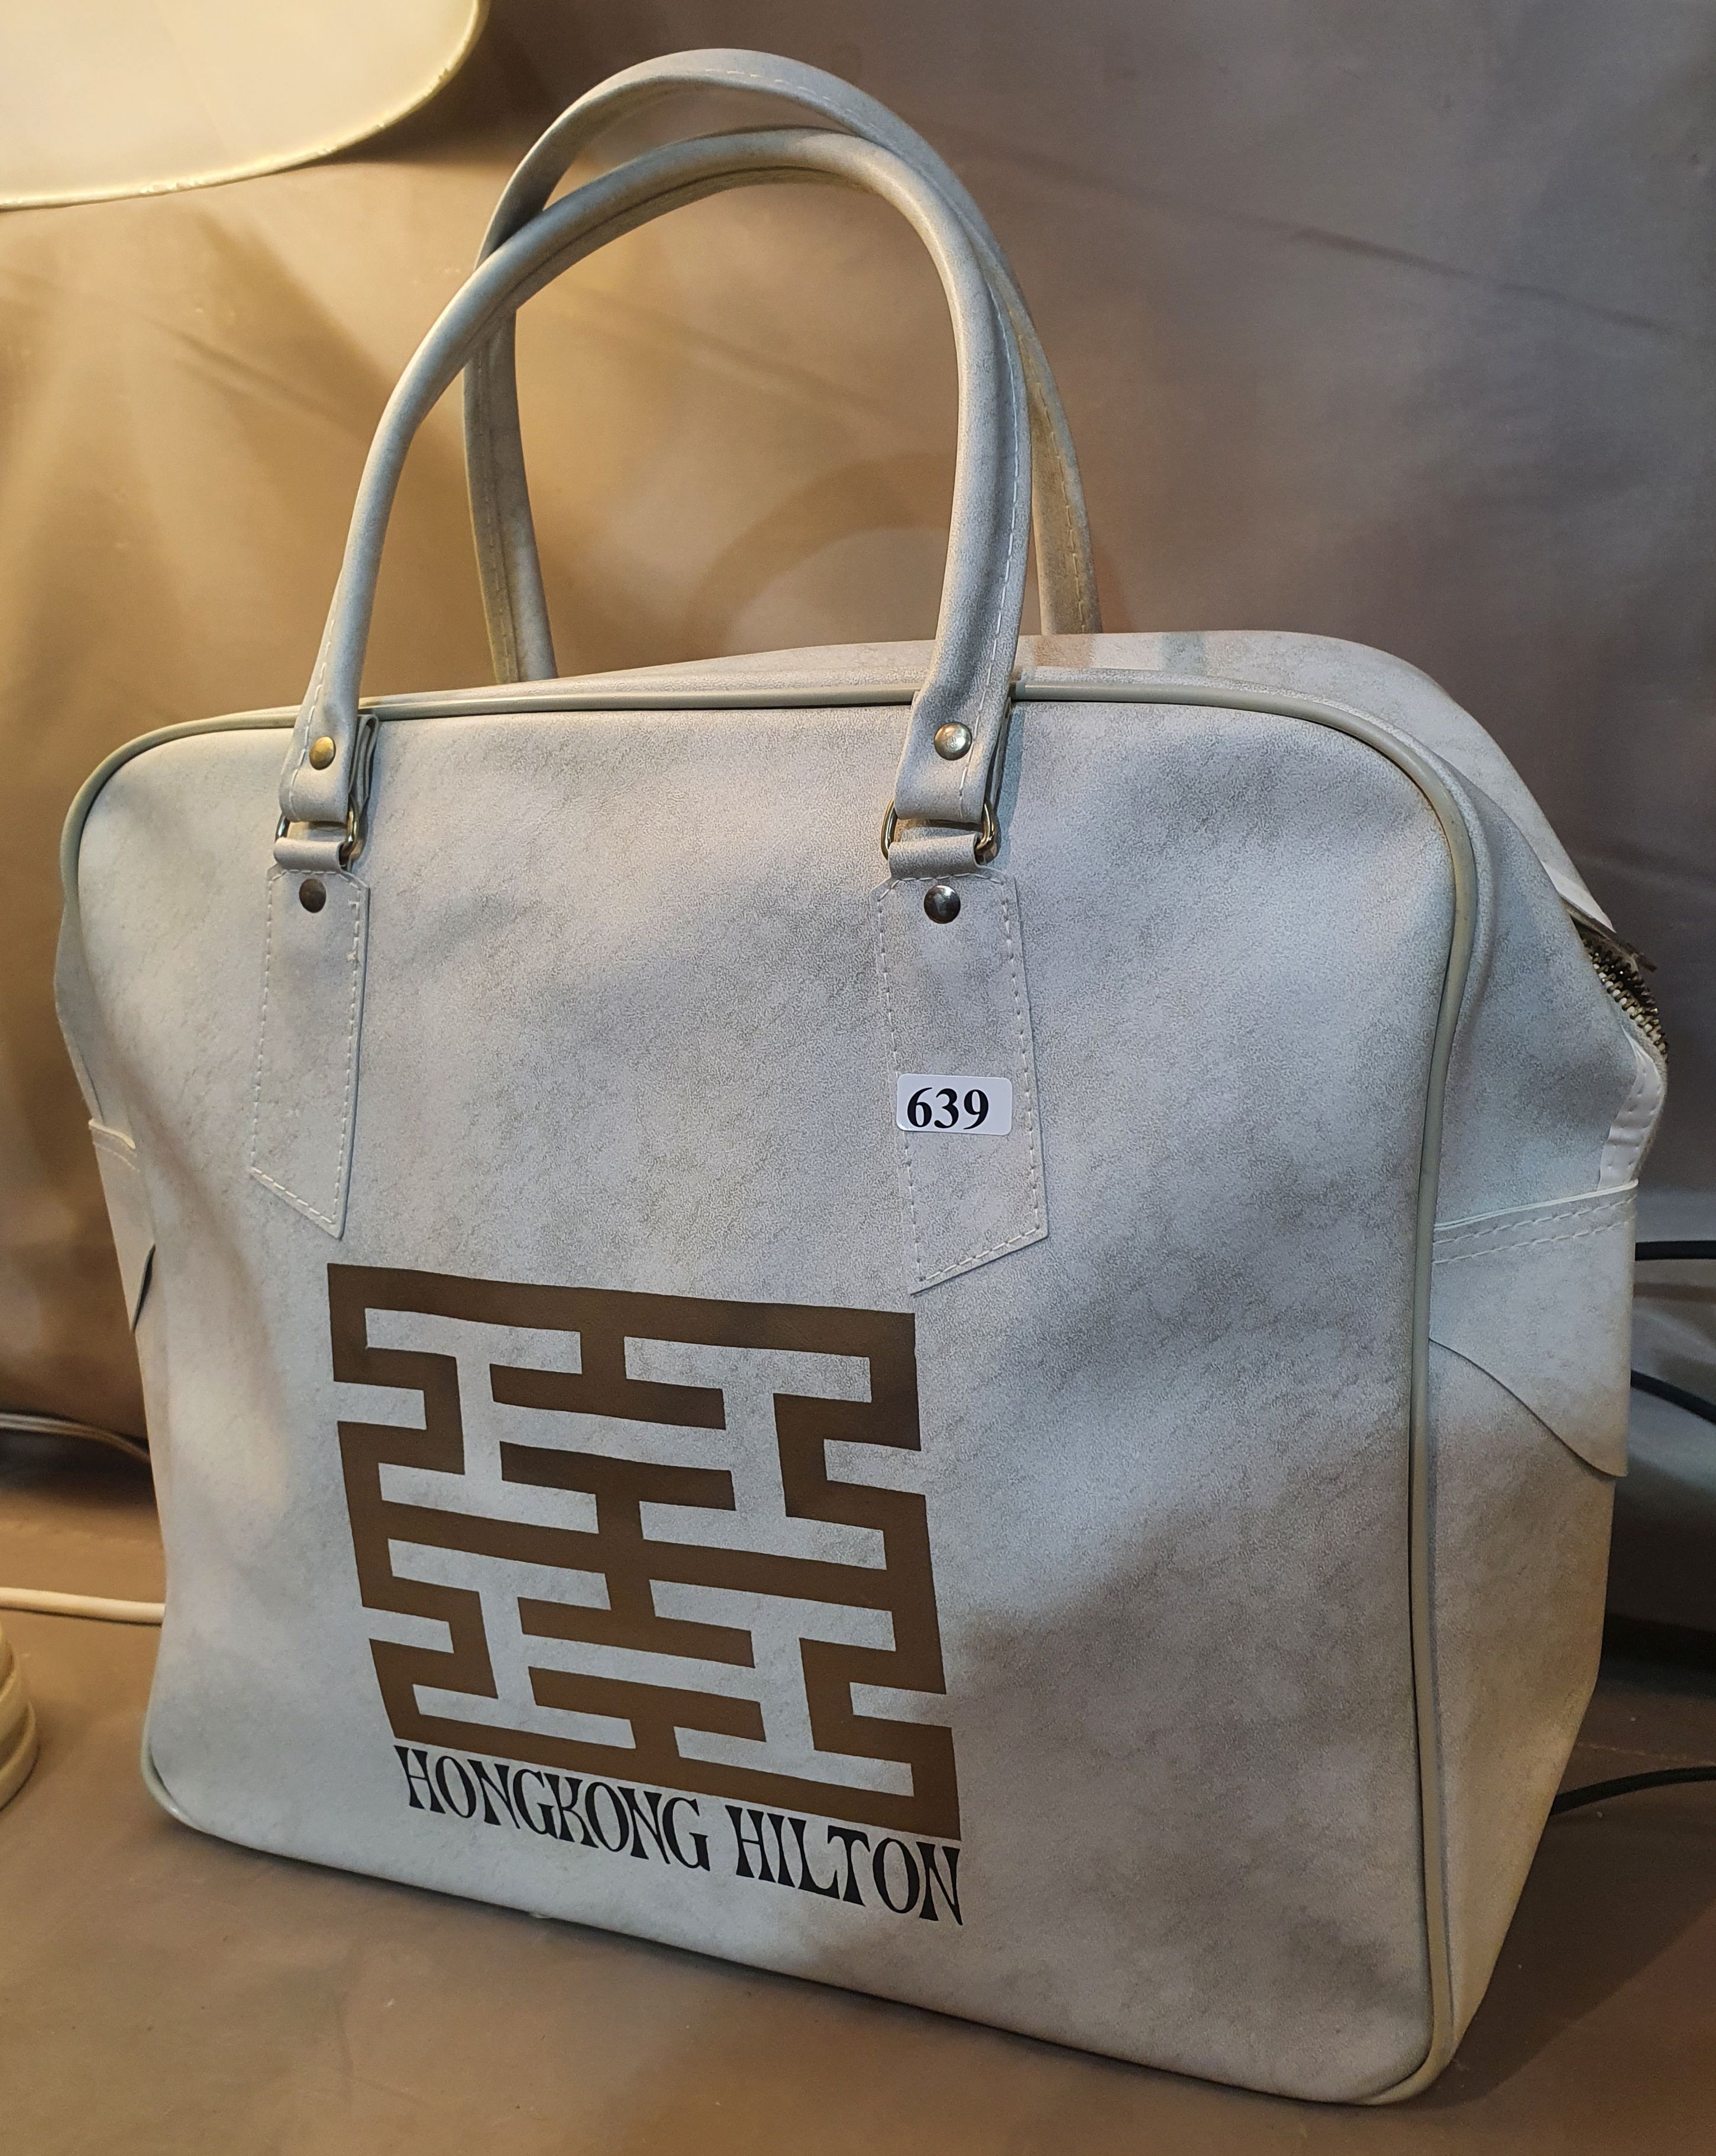 travel bag brand hk